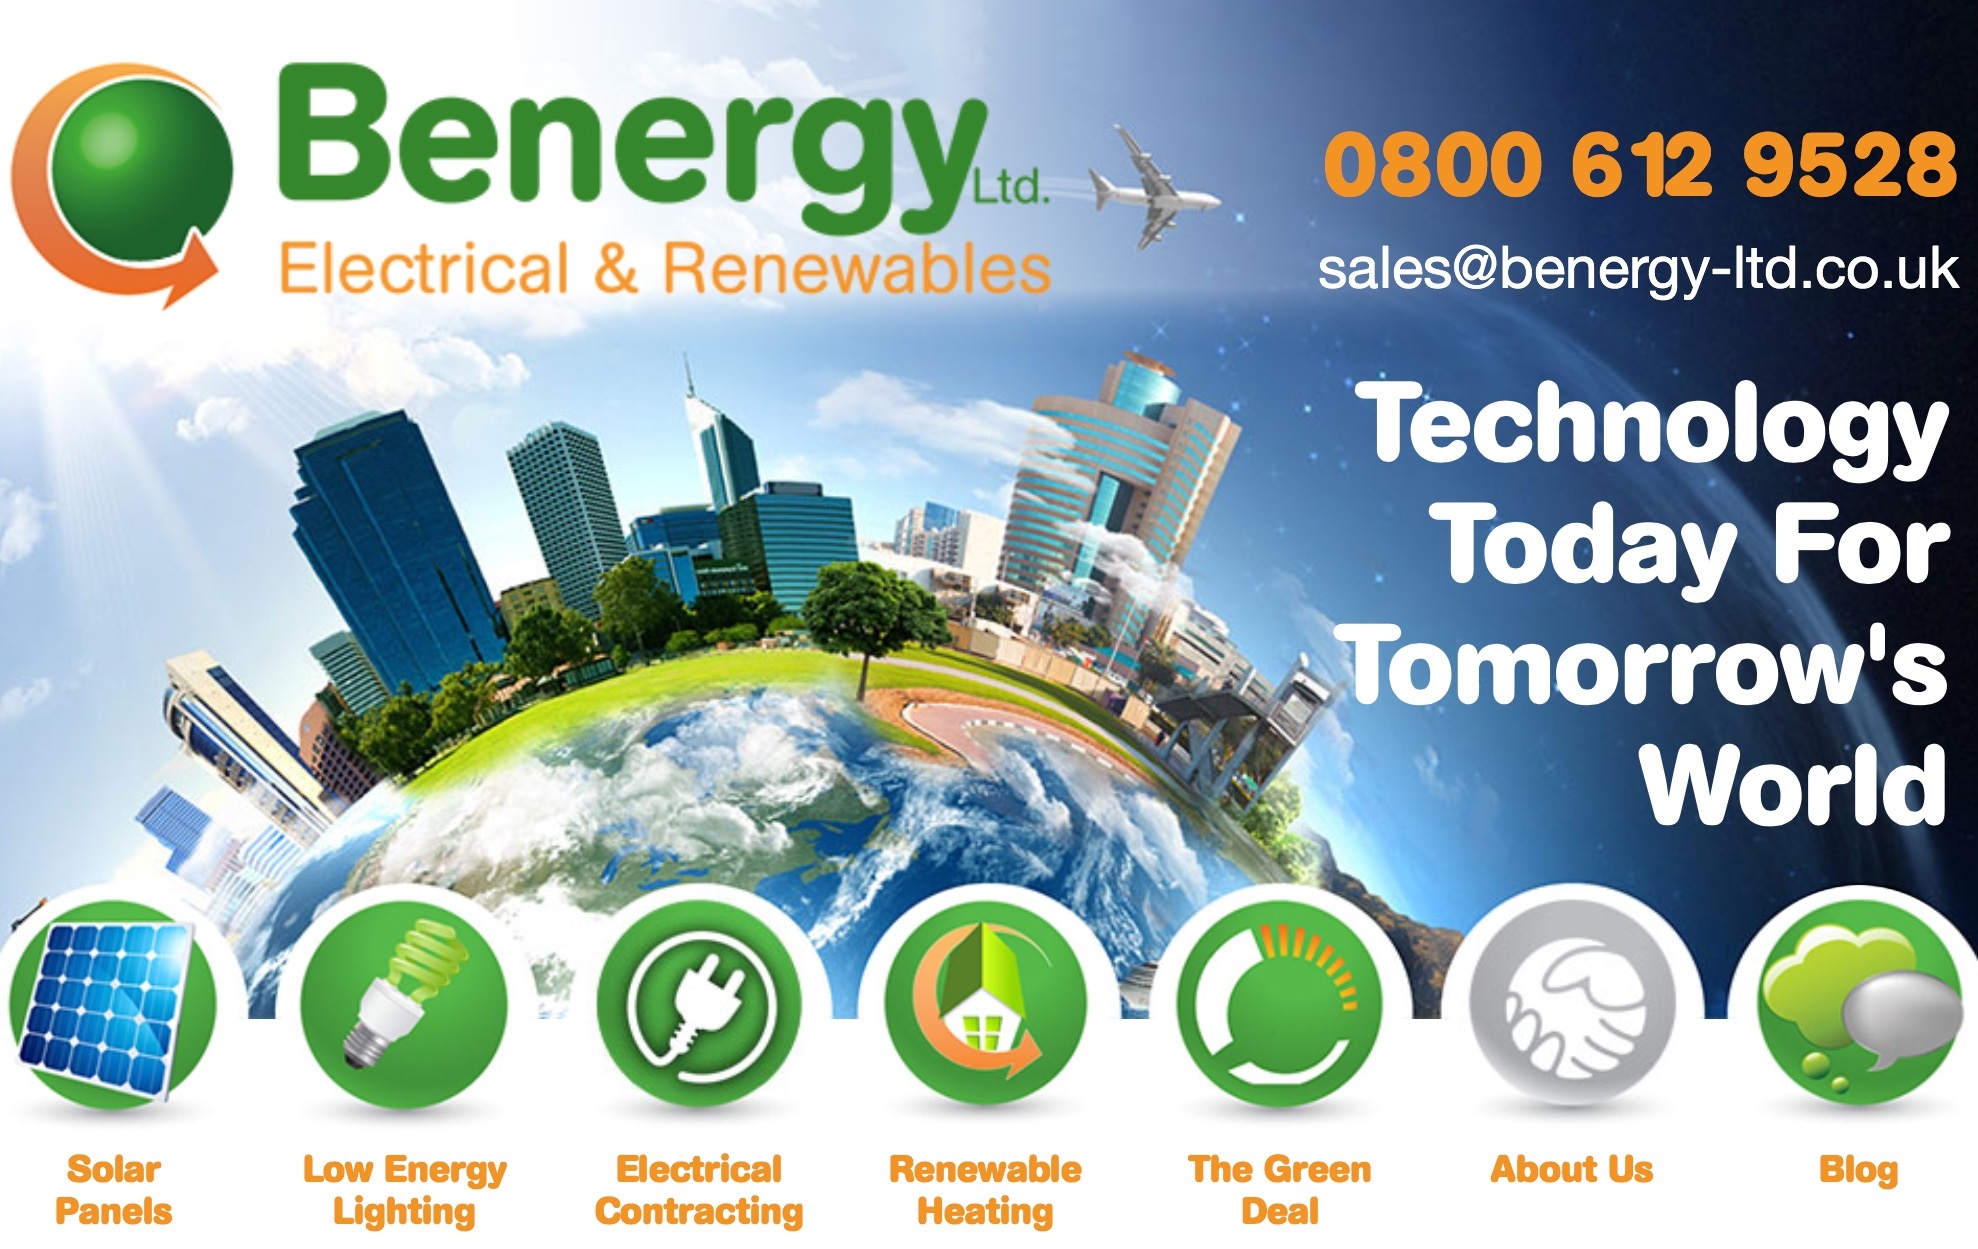 Benergy Electrical & Renewables Ltd